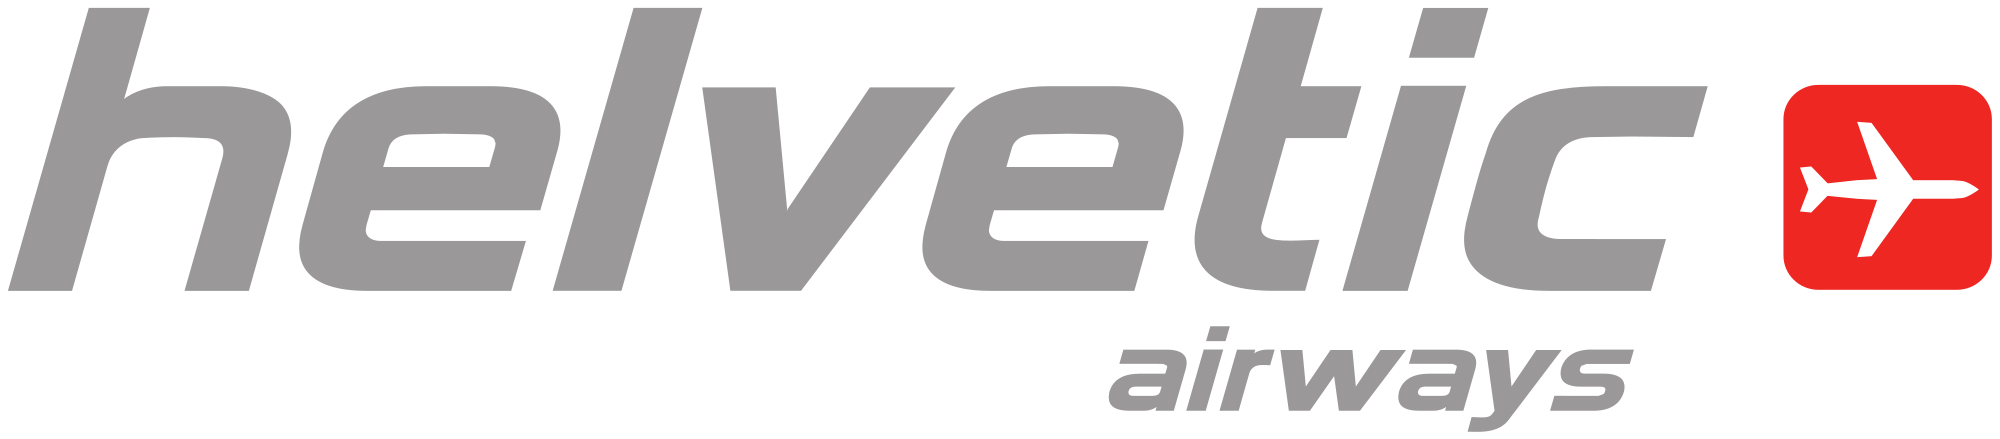 2000px-Helvetic_Airways_Logo.svg.png